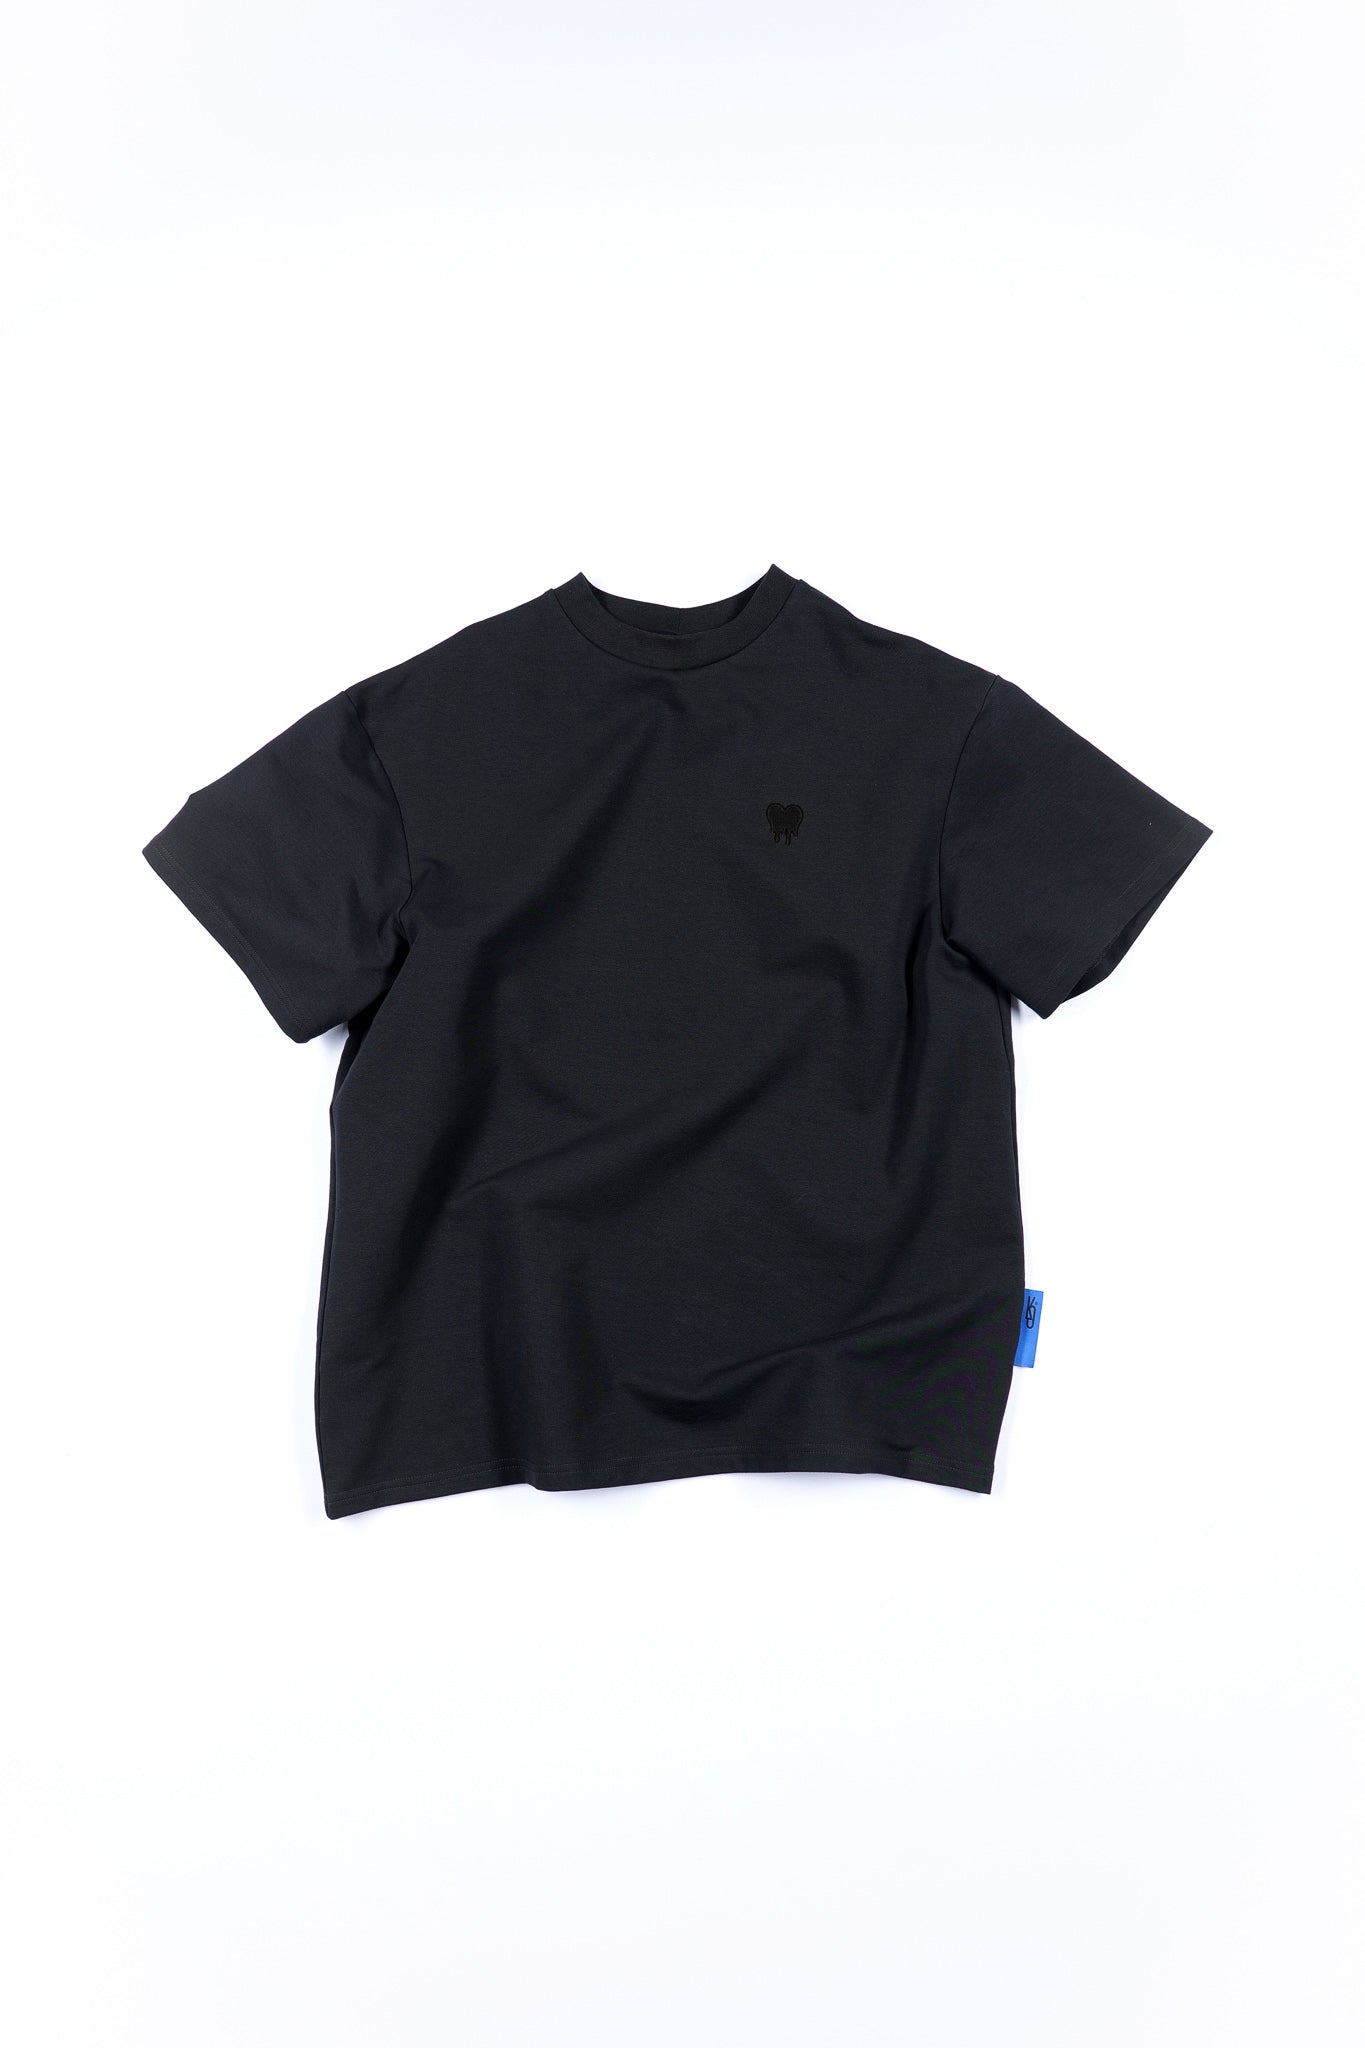 Black Melting-heart wide fit T-Shirt